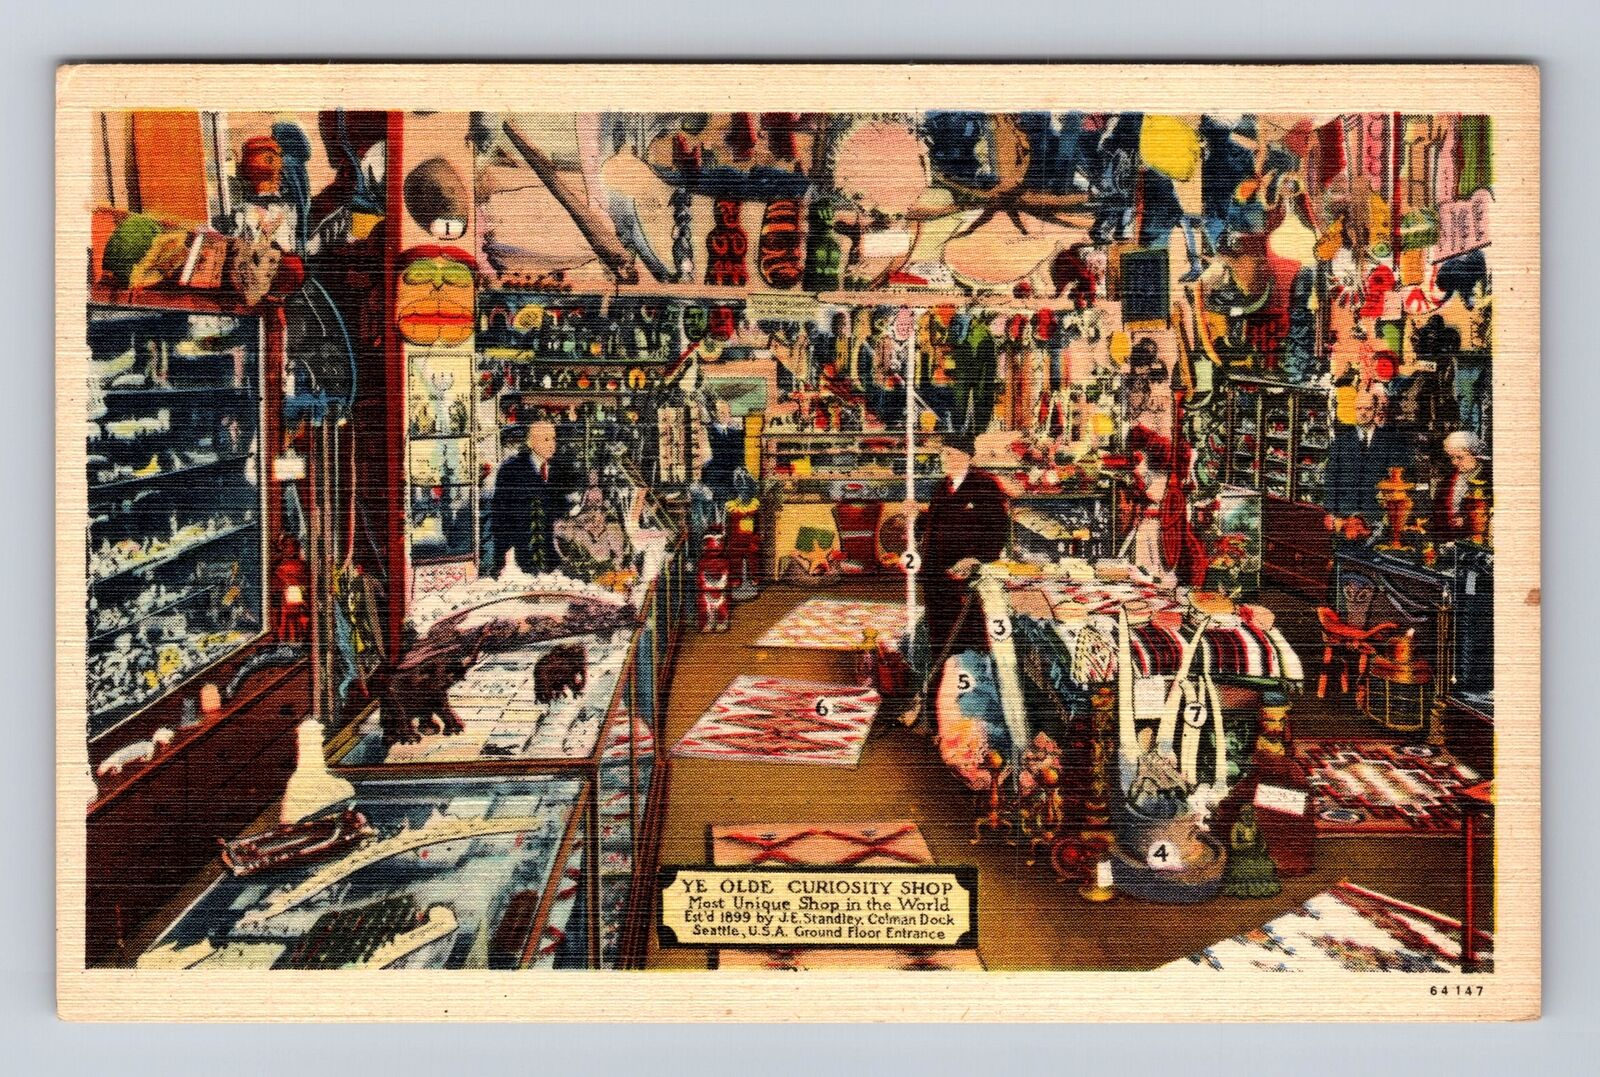 Seattle WA-Washington, Ye Olde Curiosity Shop, Inside Shop View Vintage Postcard